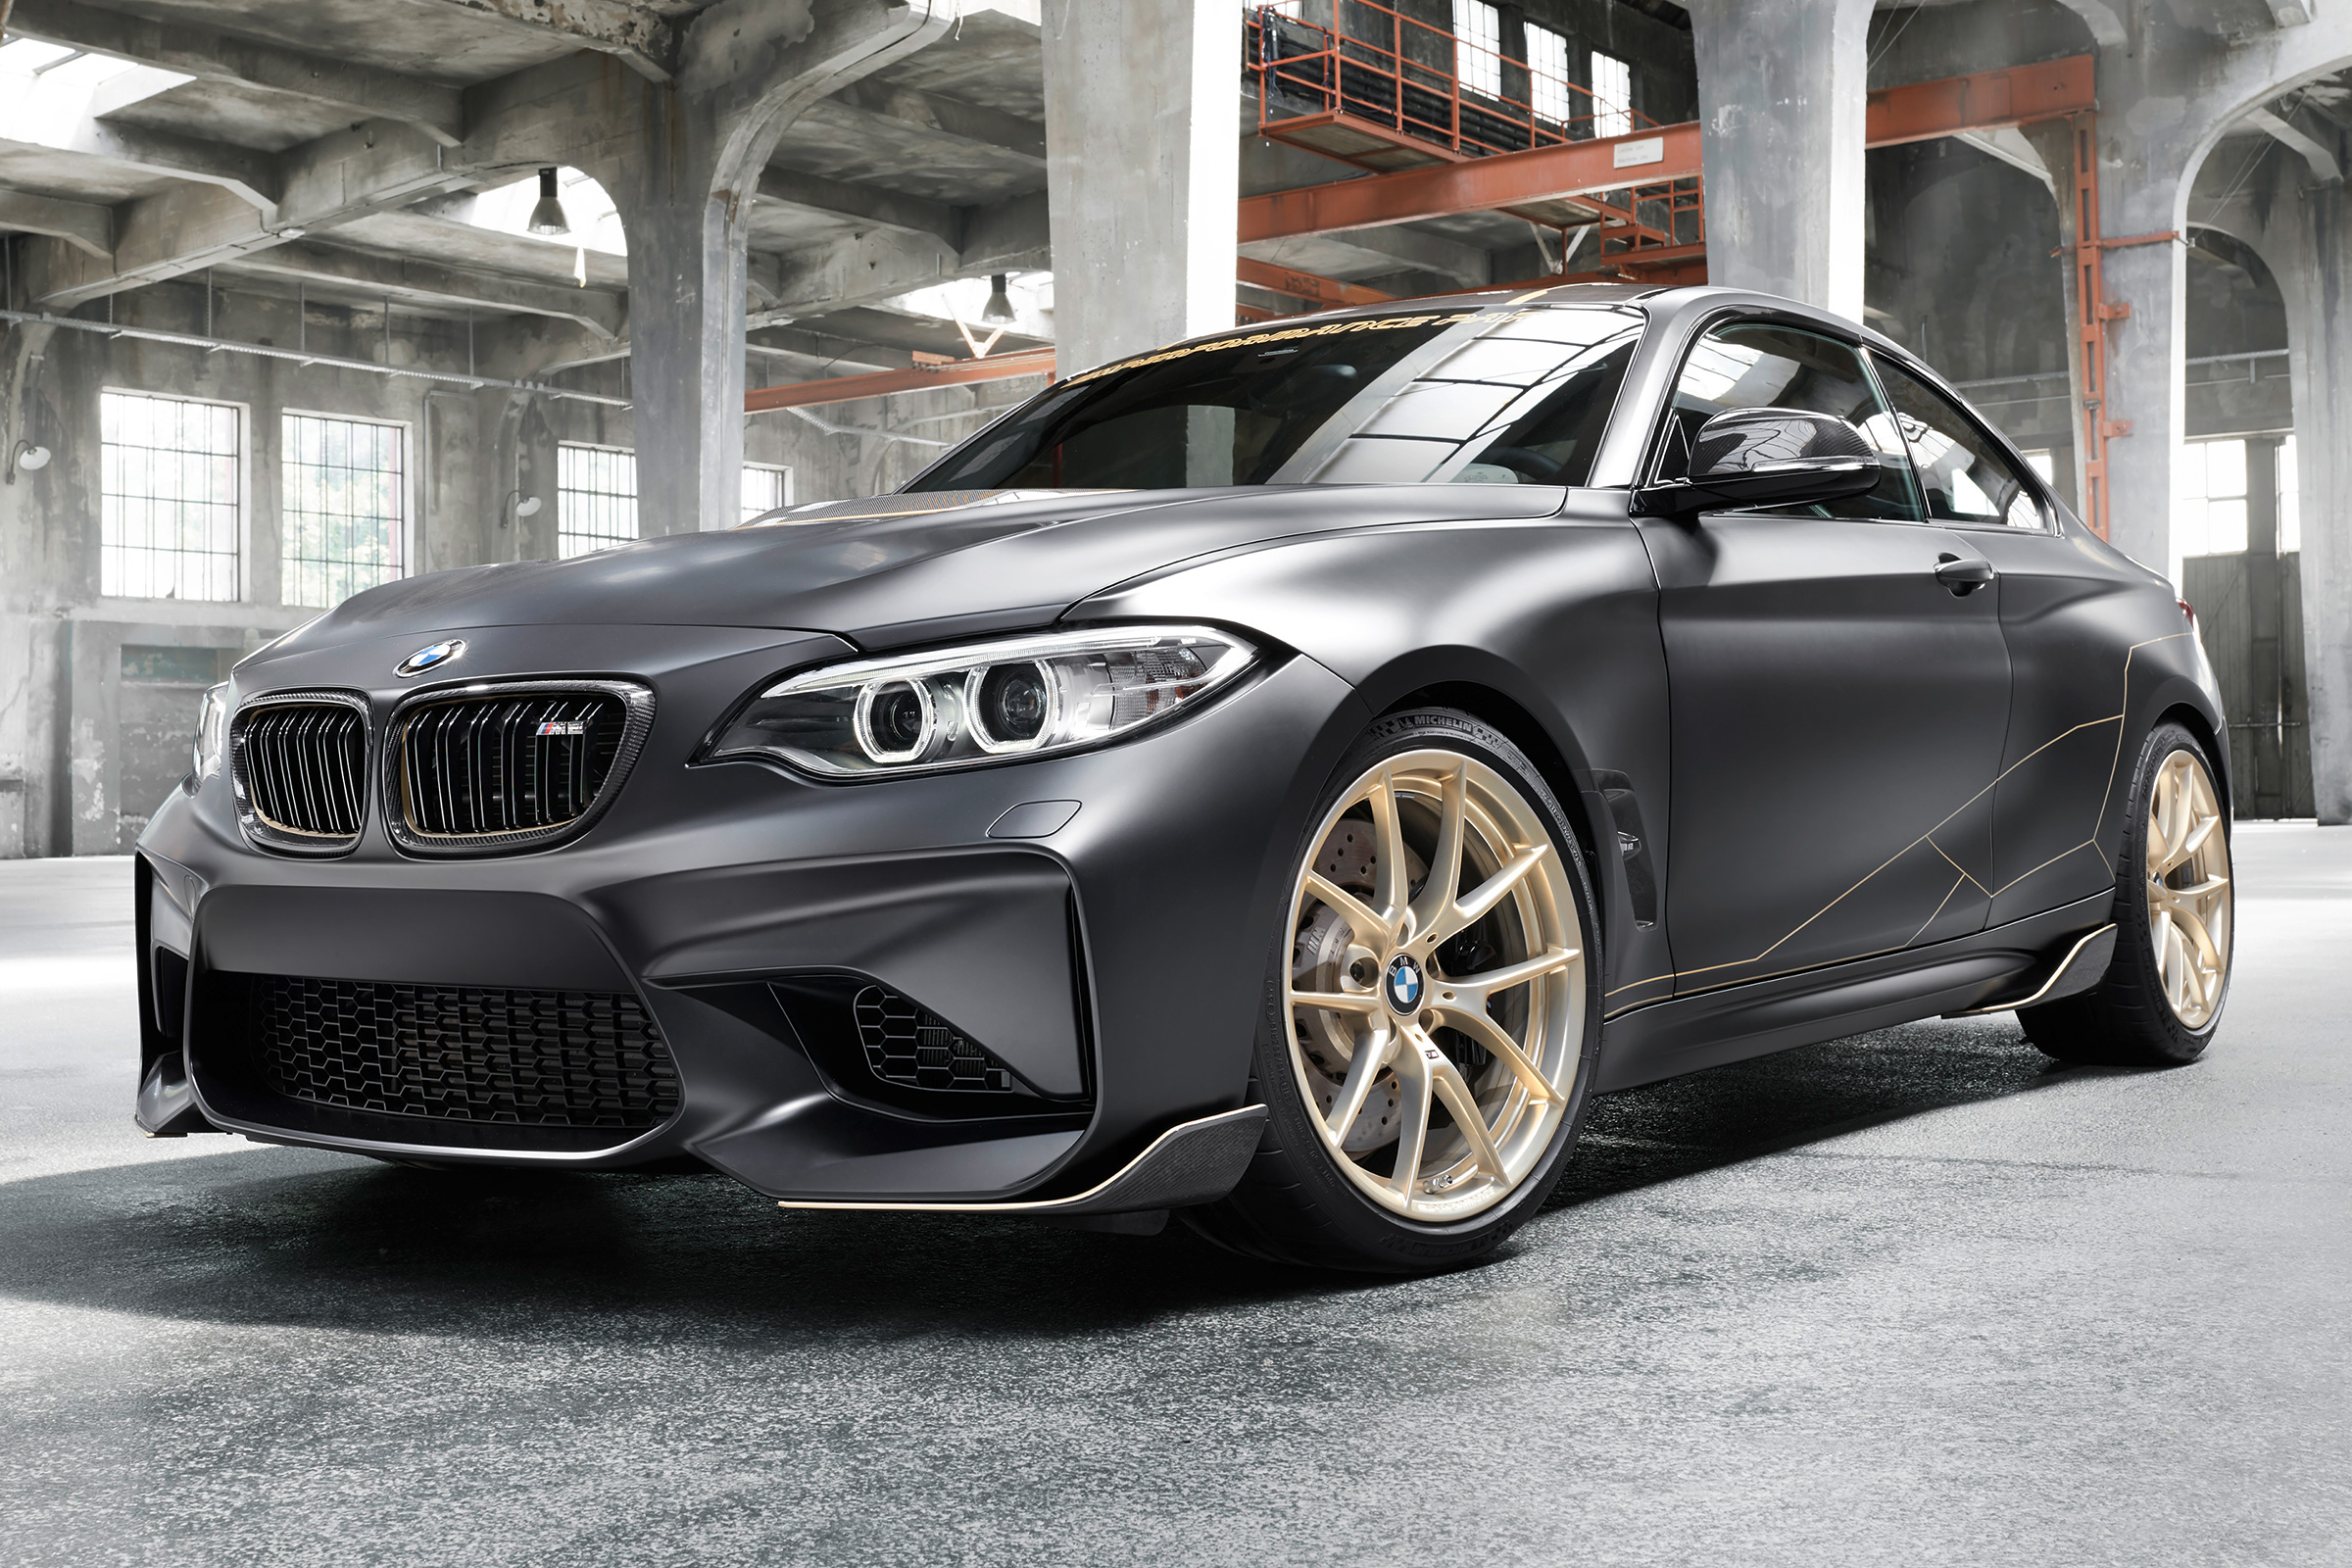 BMW M Performance Parts Concept previews new lightweight